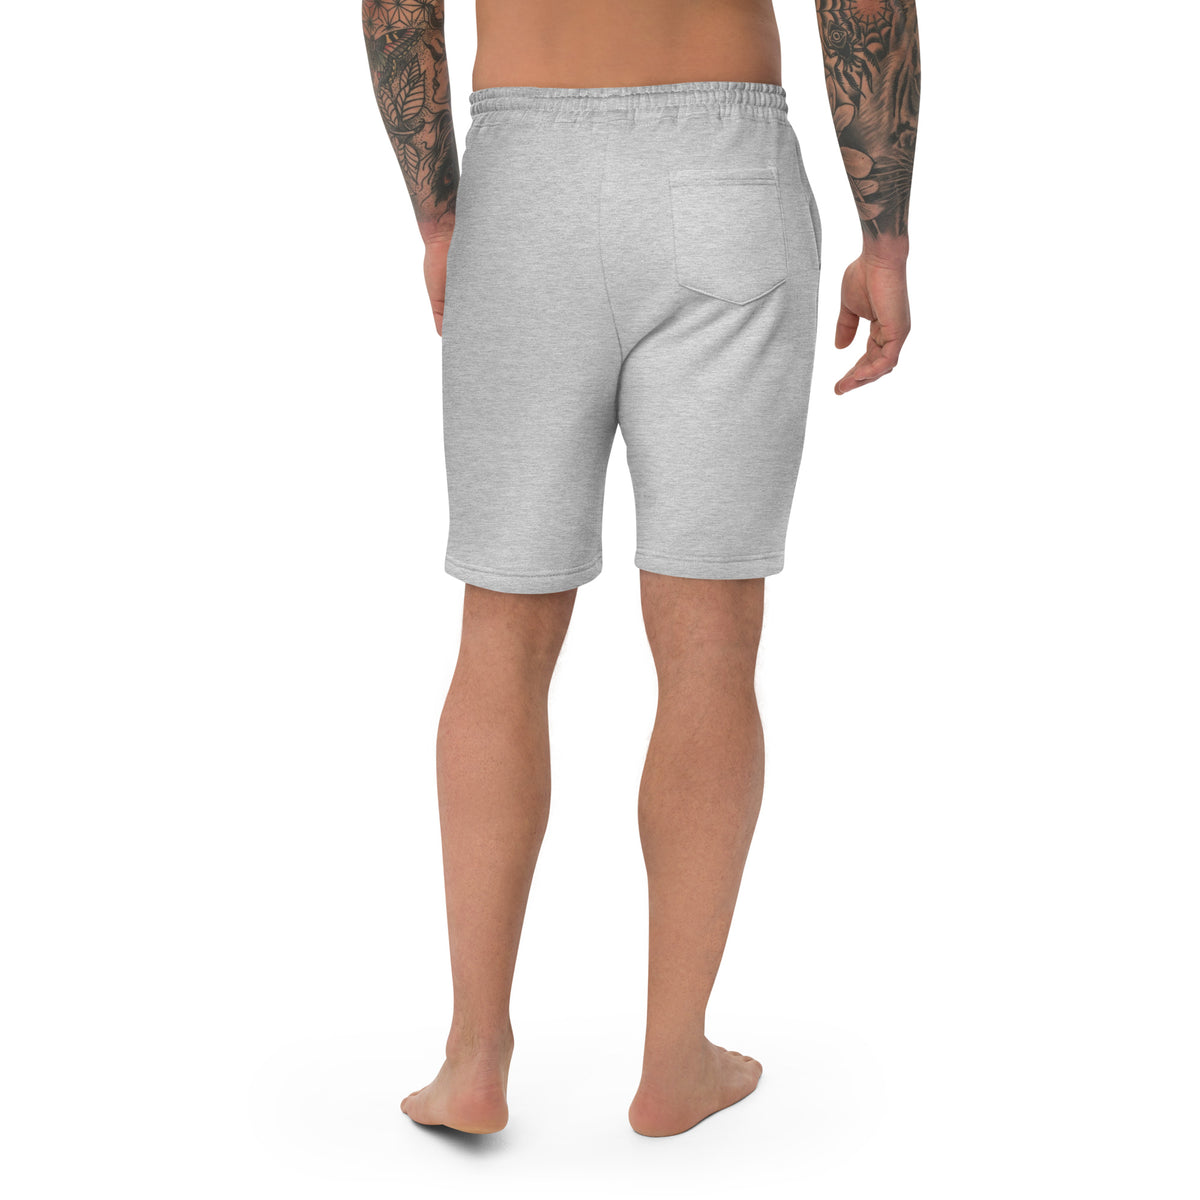 Lakeaholic Men's Fleece Shorts